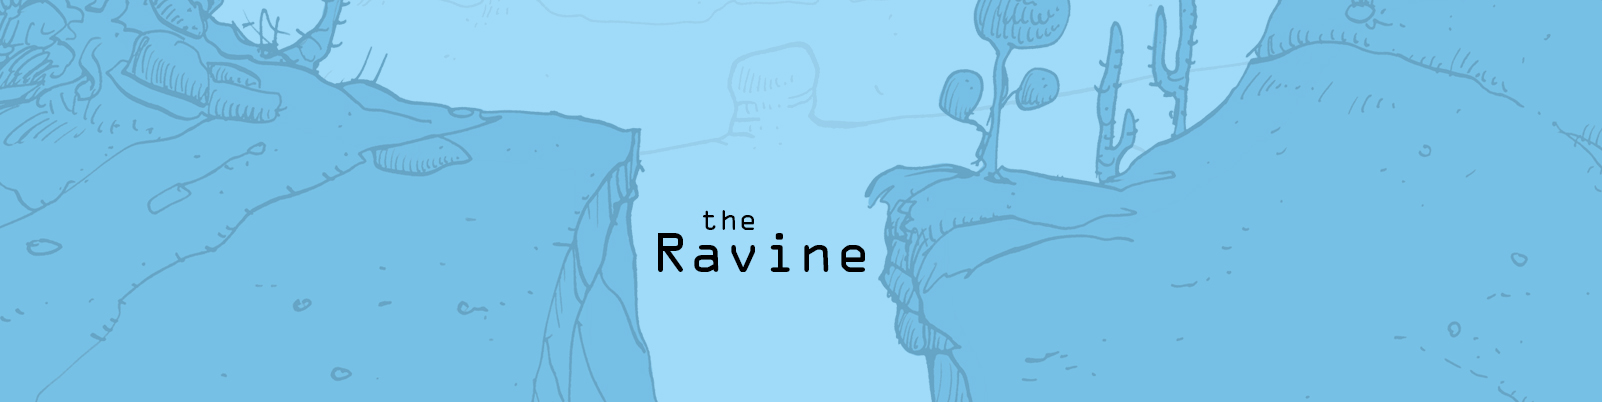 the Ravine